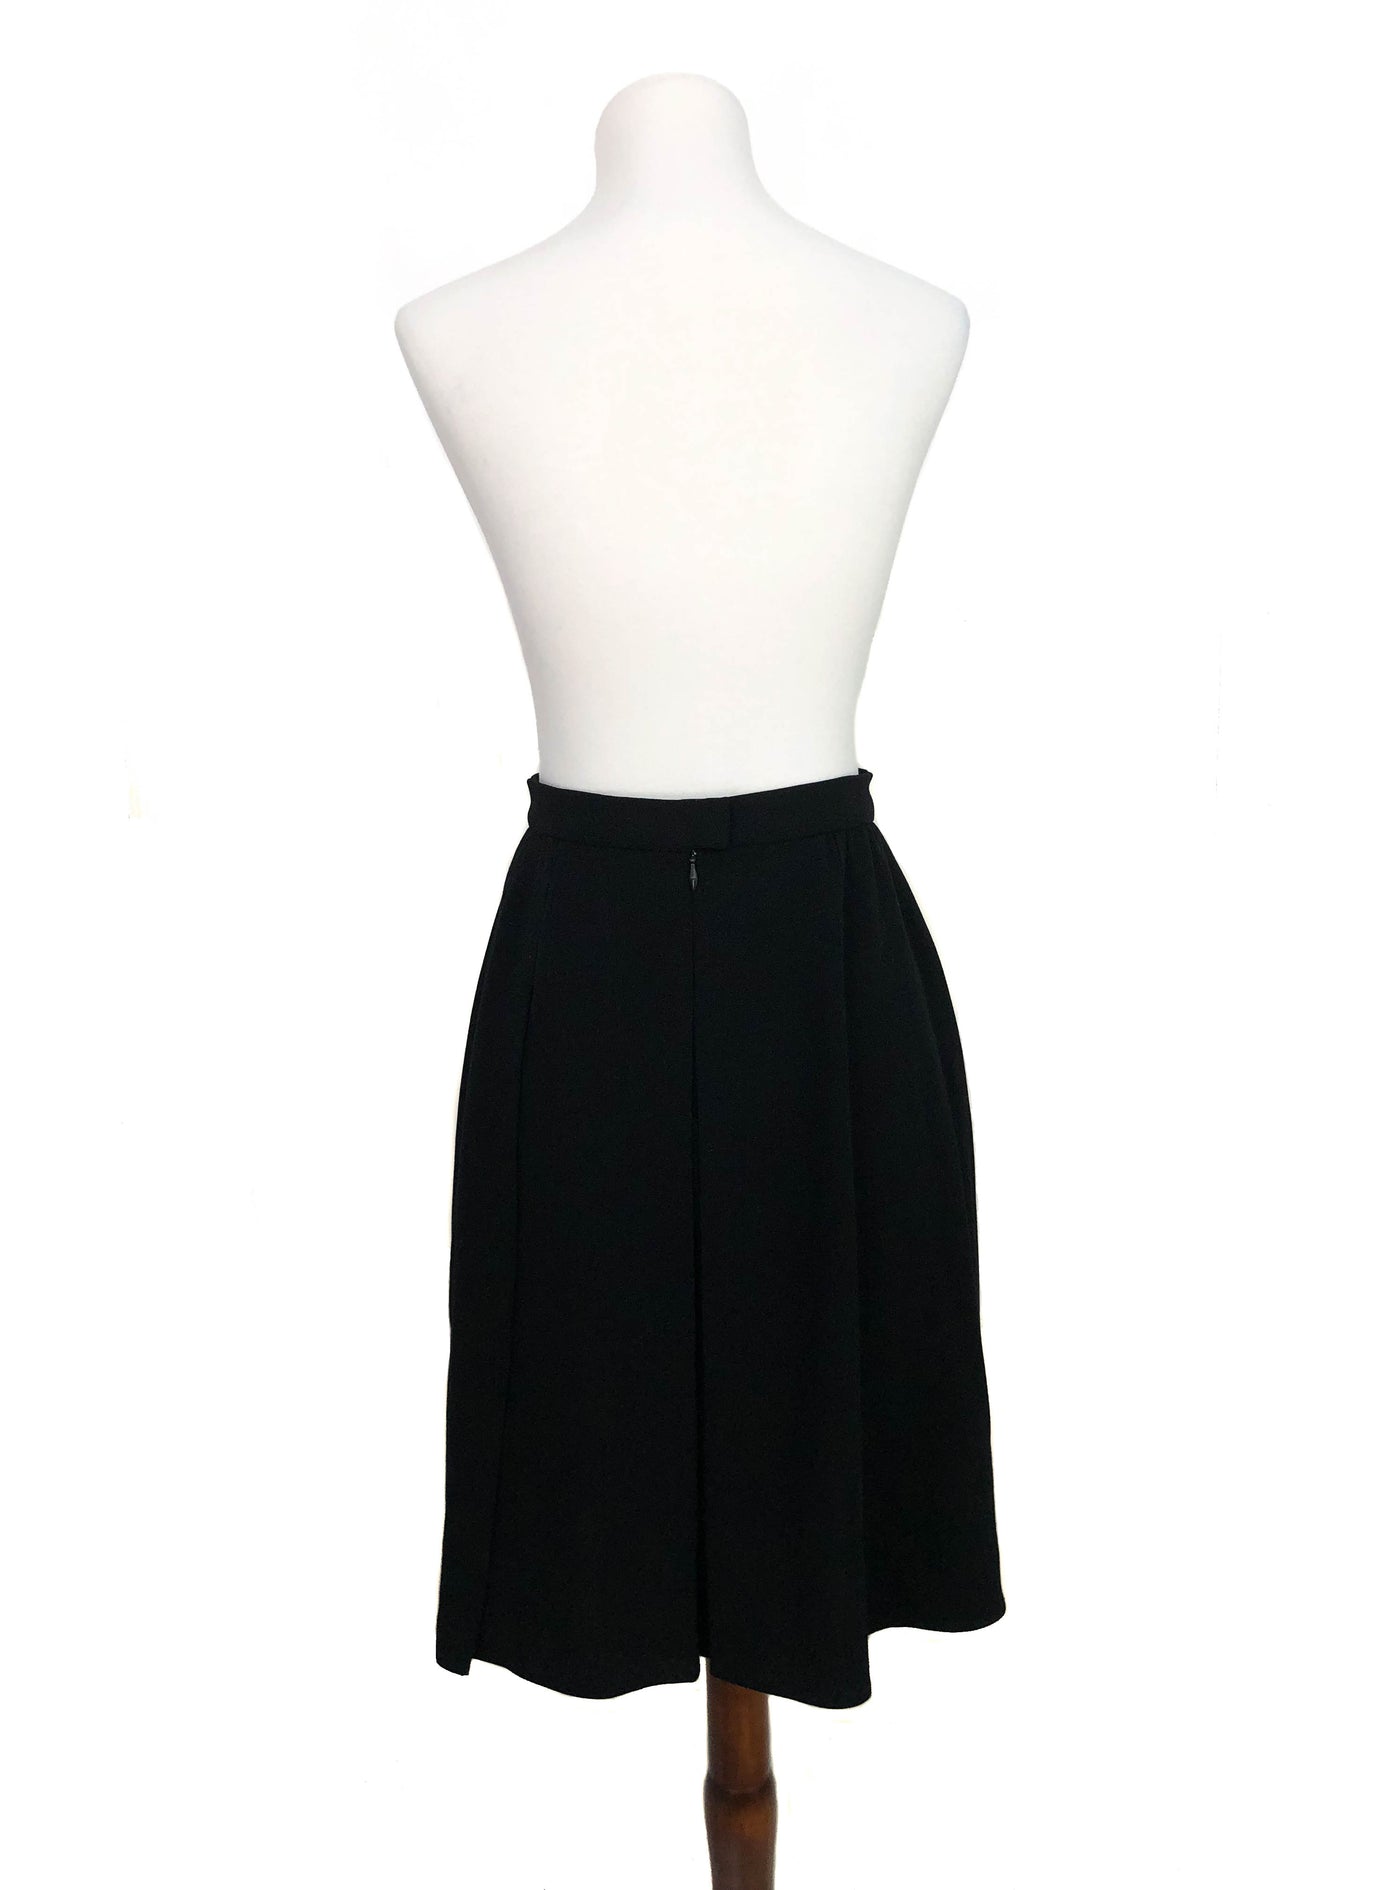 Chanel Vintage Rare Black Classic Swing Skirt